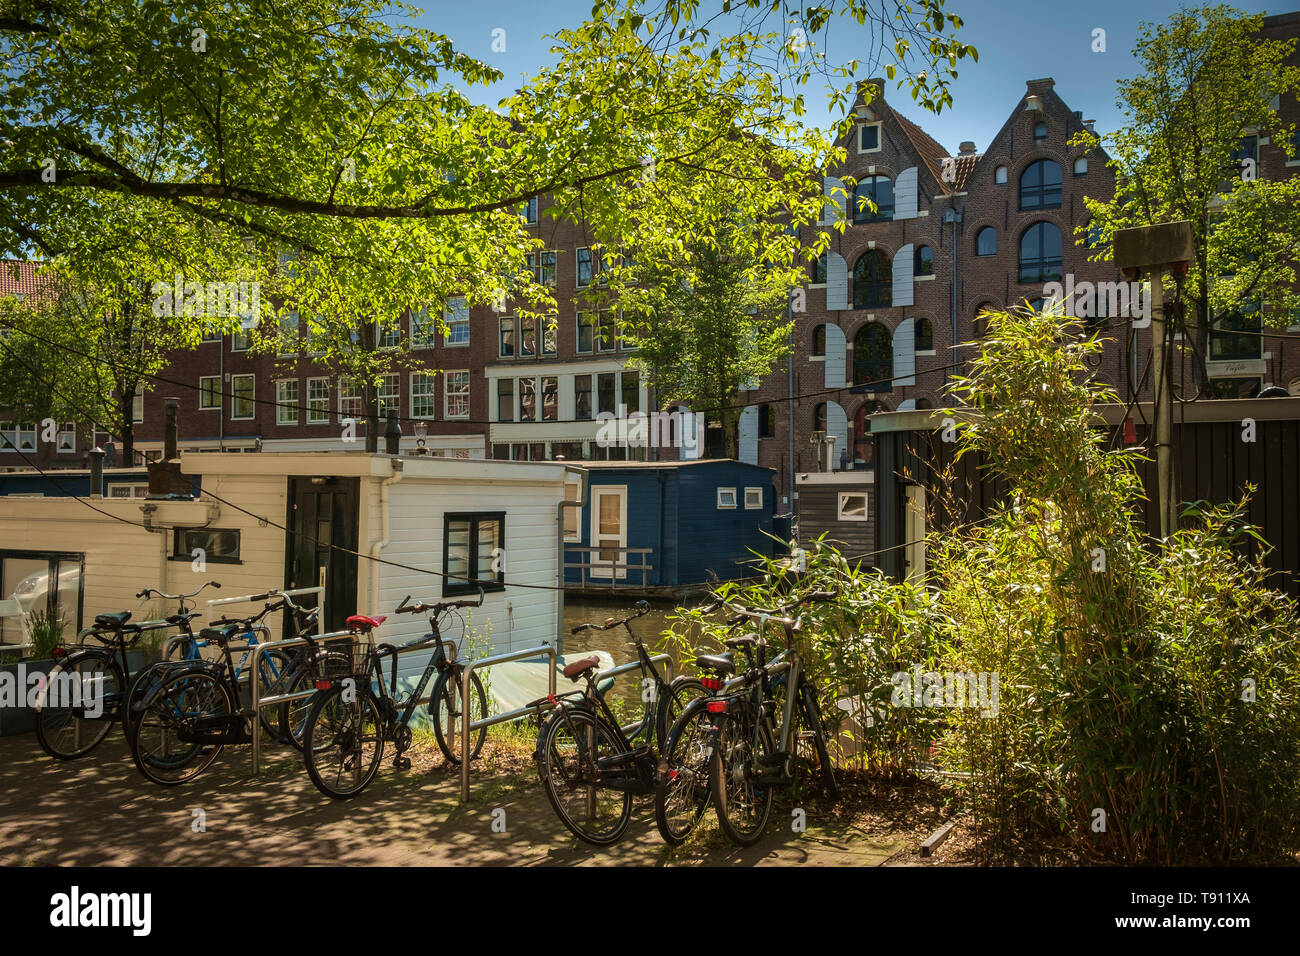 Houseboats, warehouses, cycle racks and greenery along an Amsterdam canal. Stock Photo